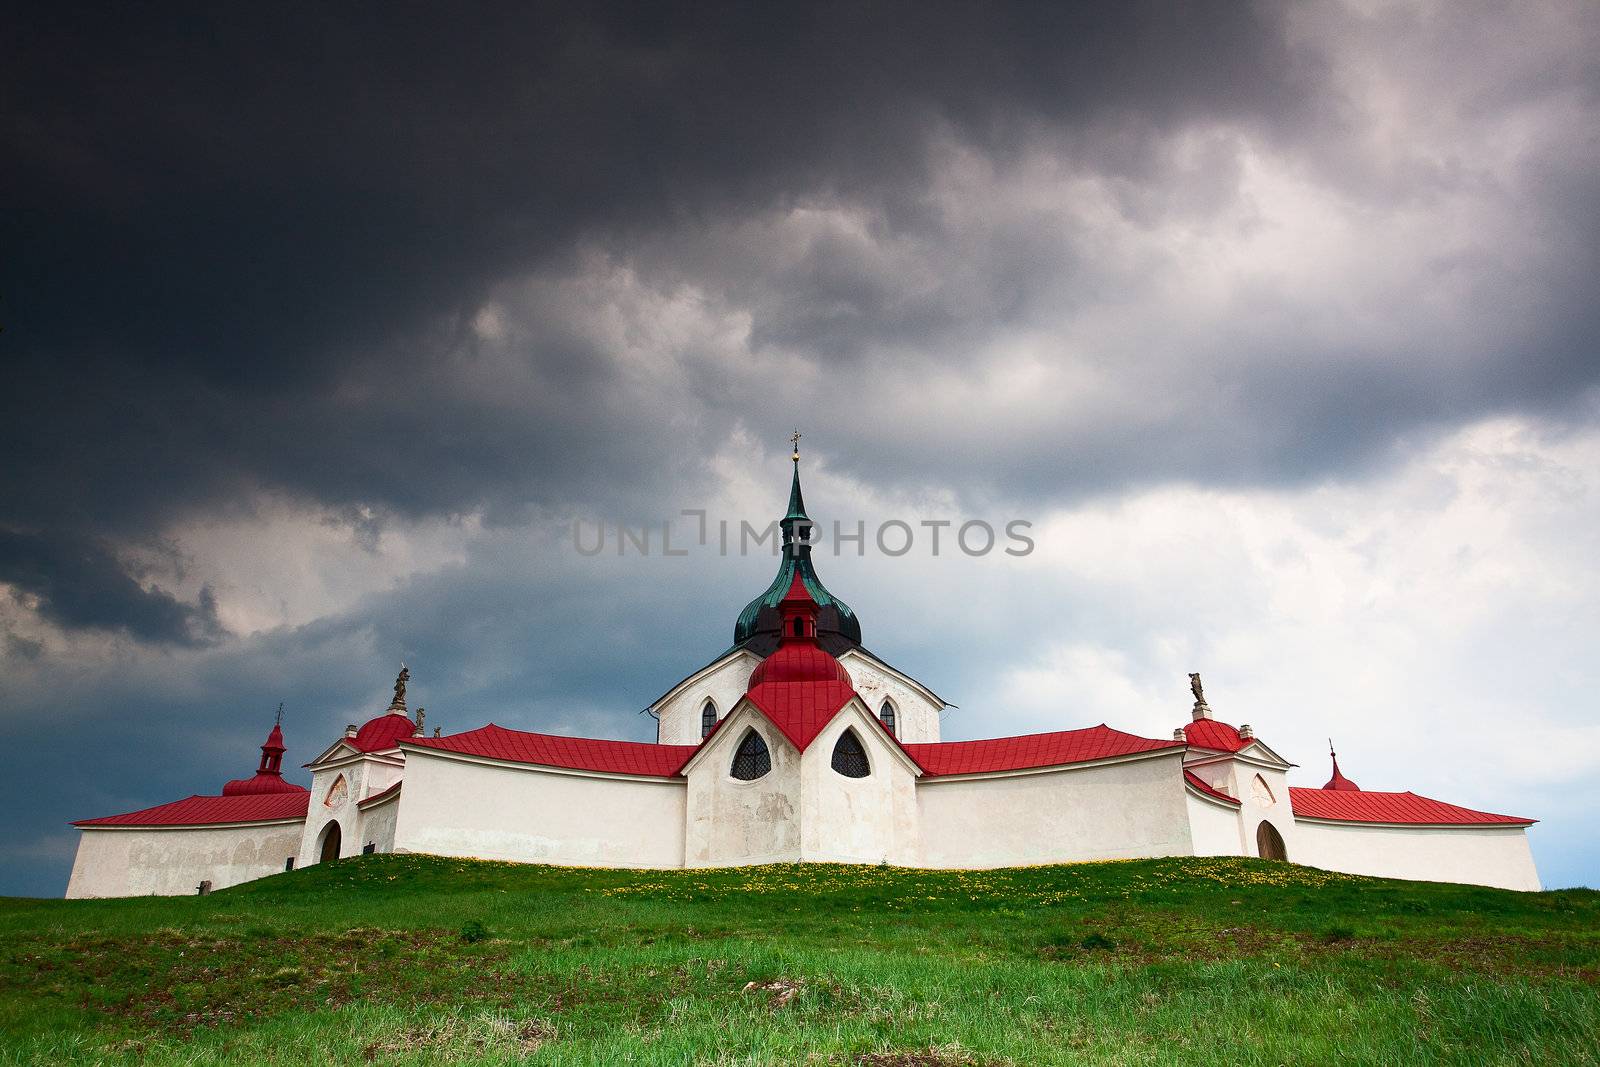 The pilgrimage church zelena hora by CaptureLight